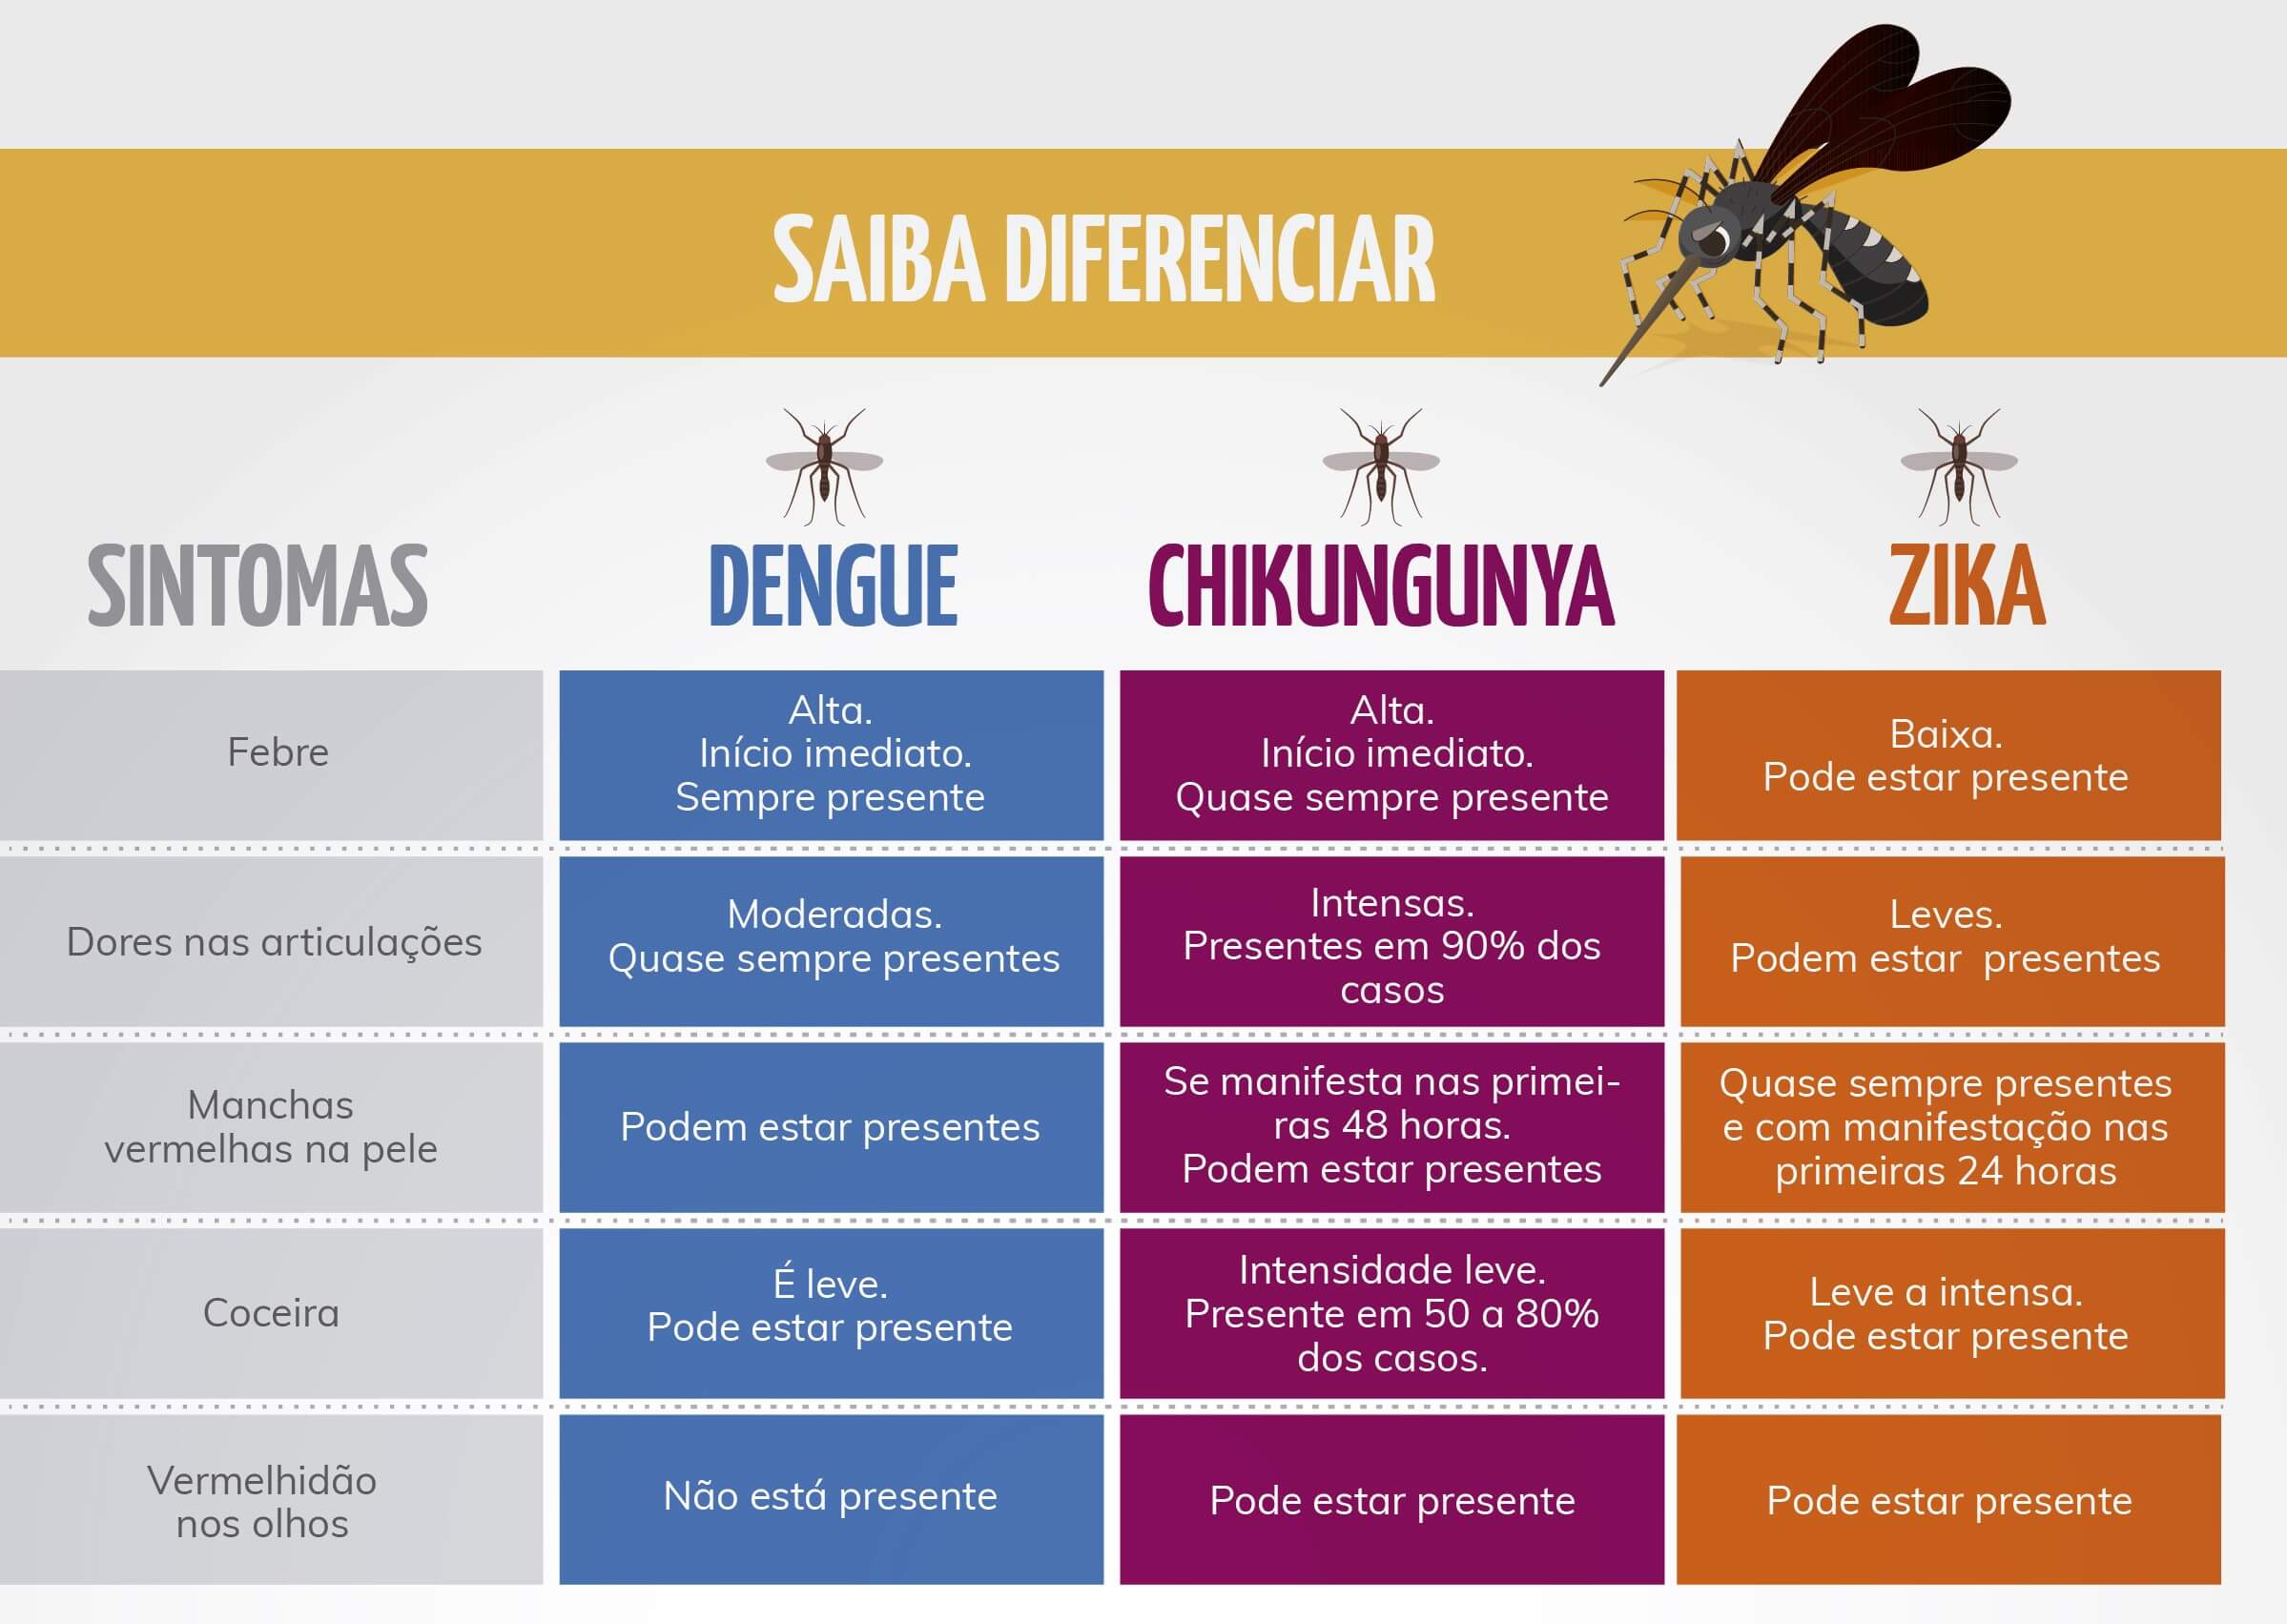 Sintomas de dengue, zika e chikungunya